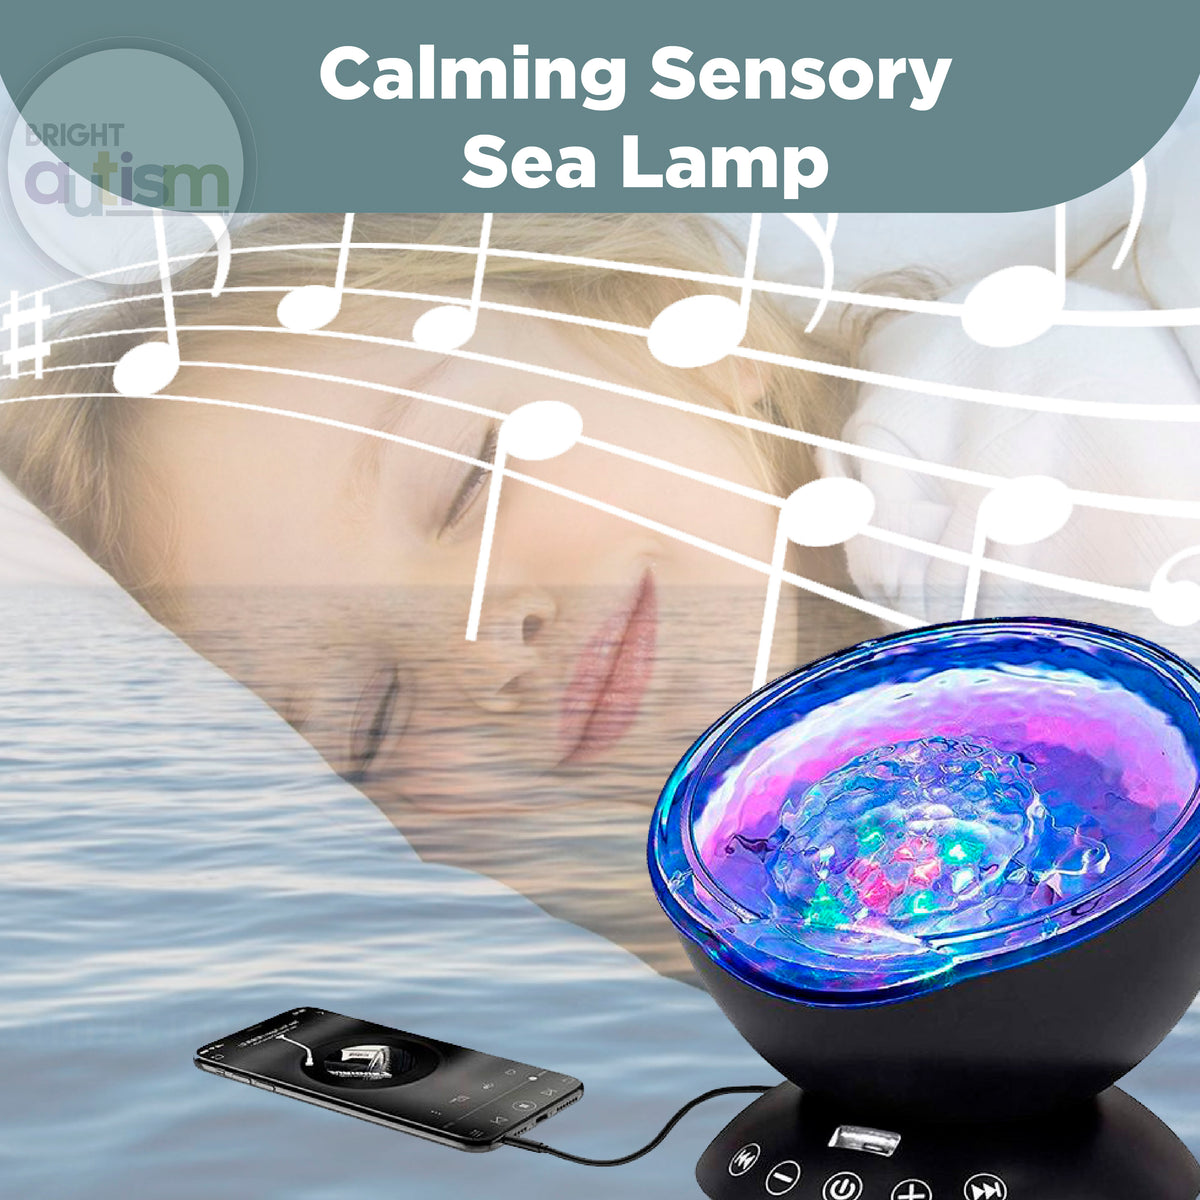 A baby sleeping with Calming Sensory Sea Lamp